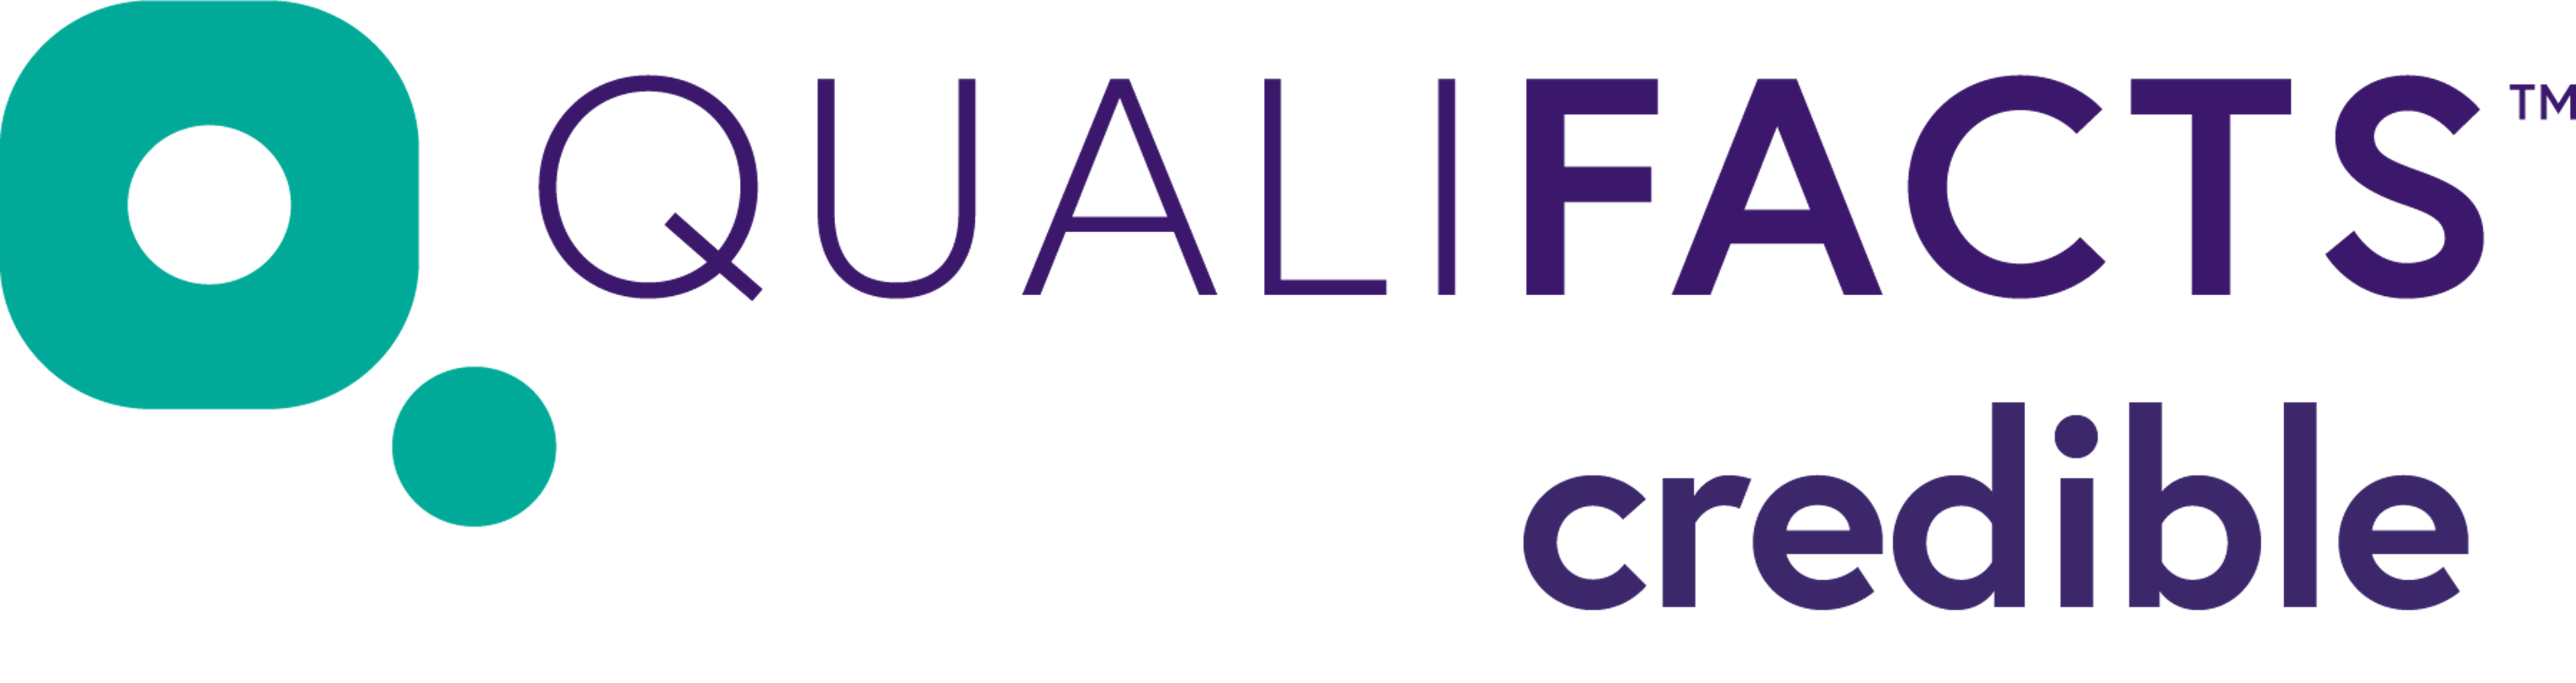 Qualifacts Credible Logo